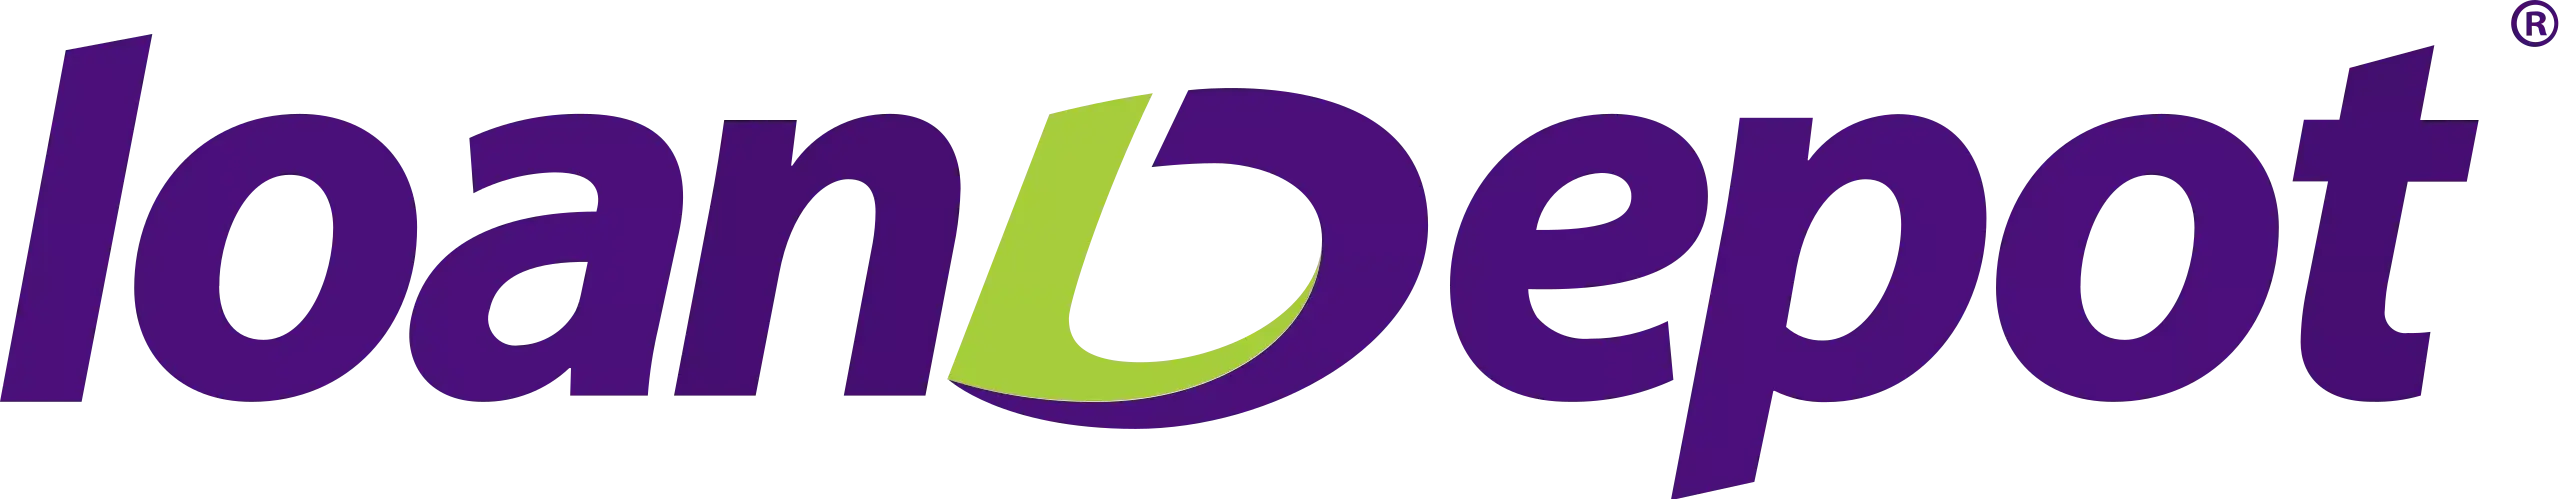 Asana Case Study - loanDepot logo